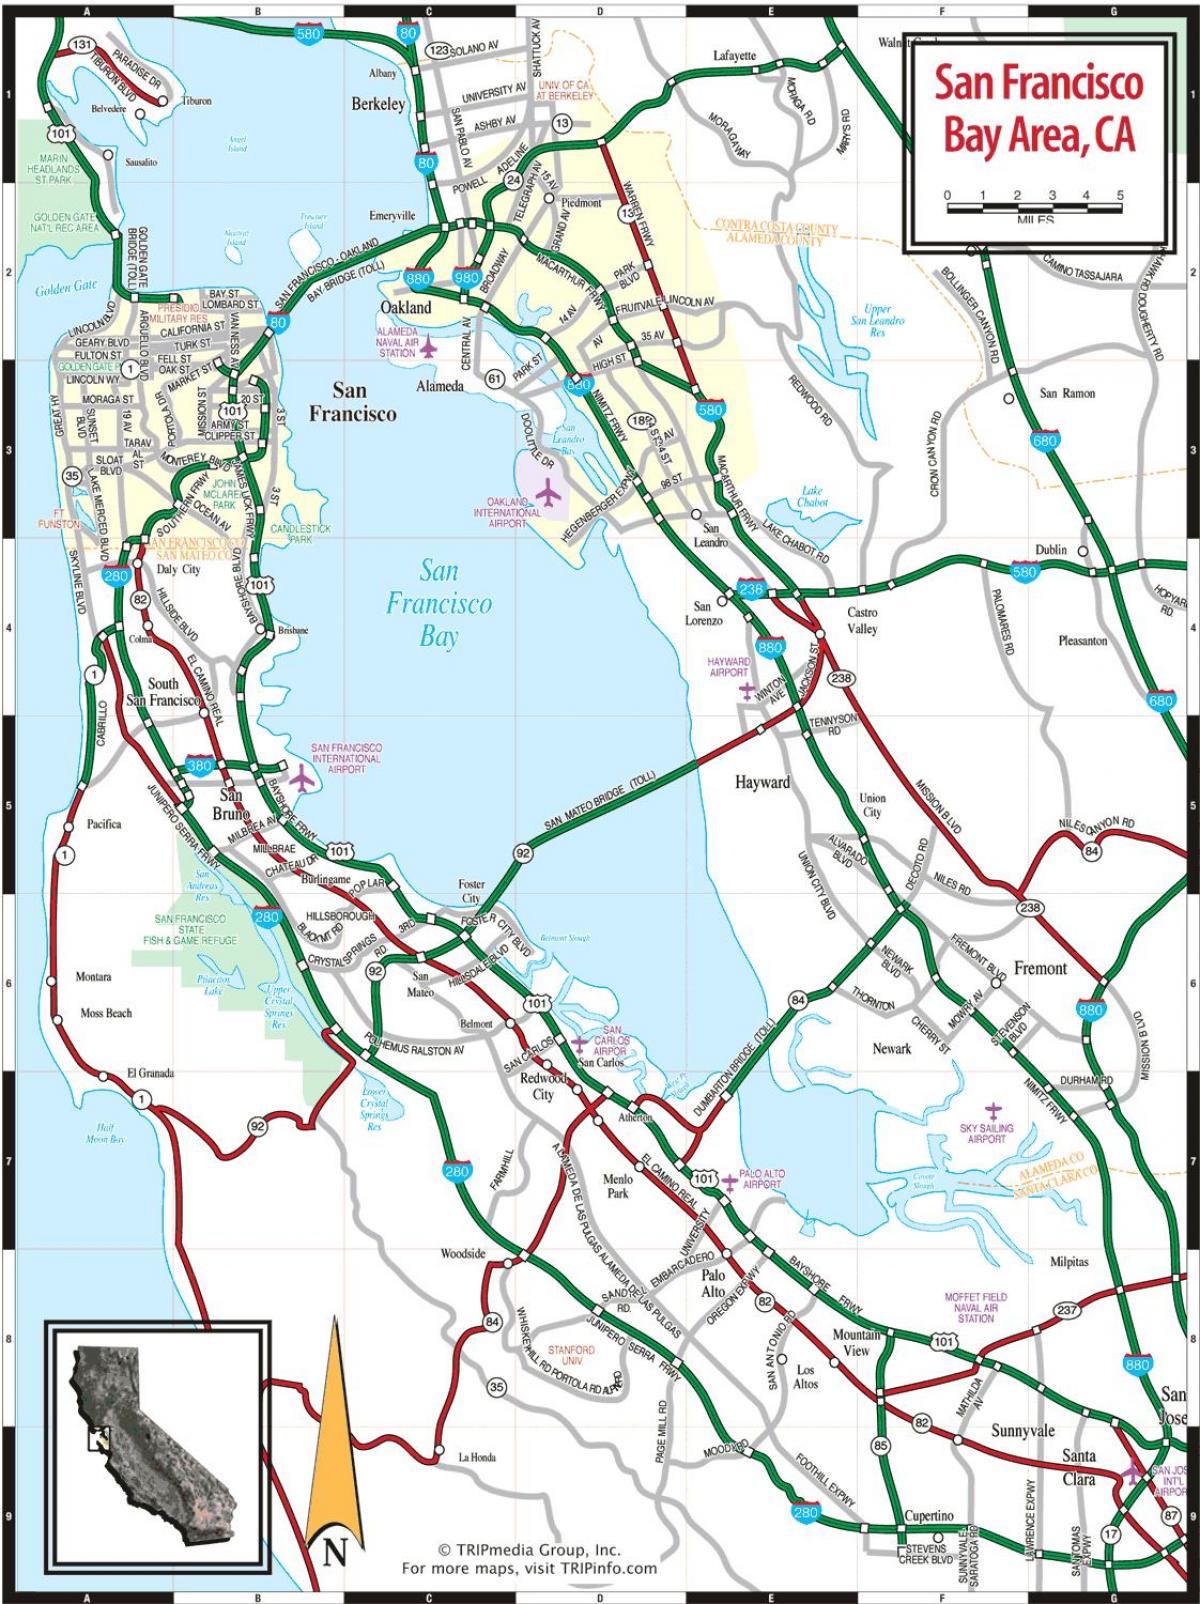 kart over San Francisco bay area